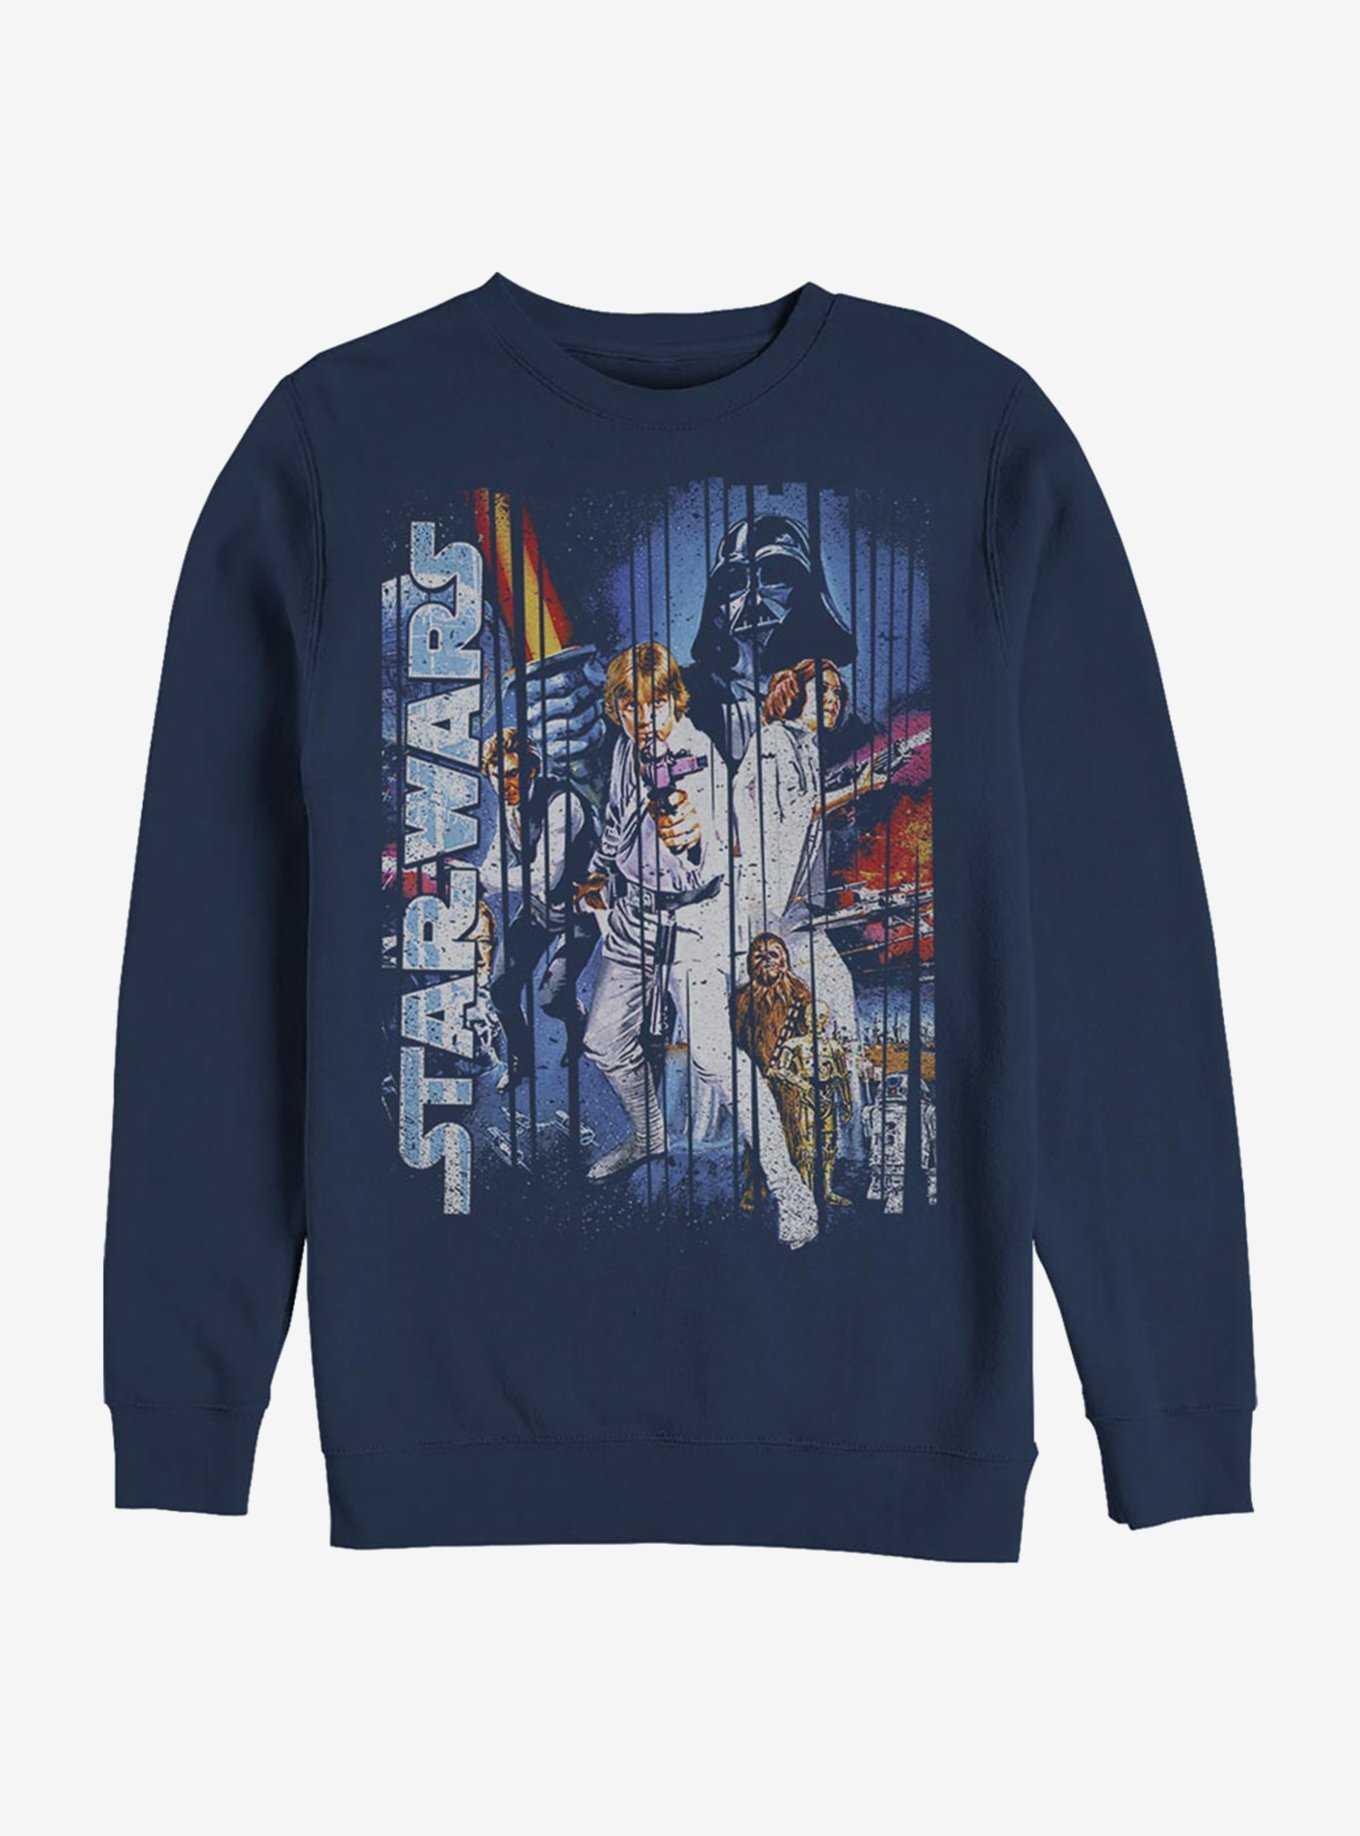 Star Wars Classic Scene Sweatshirt, , hi-res